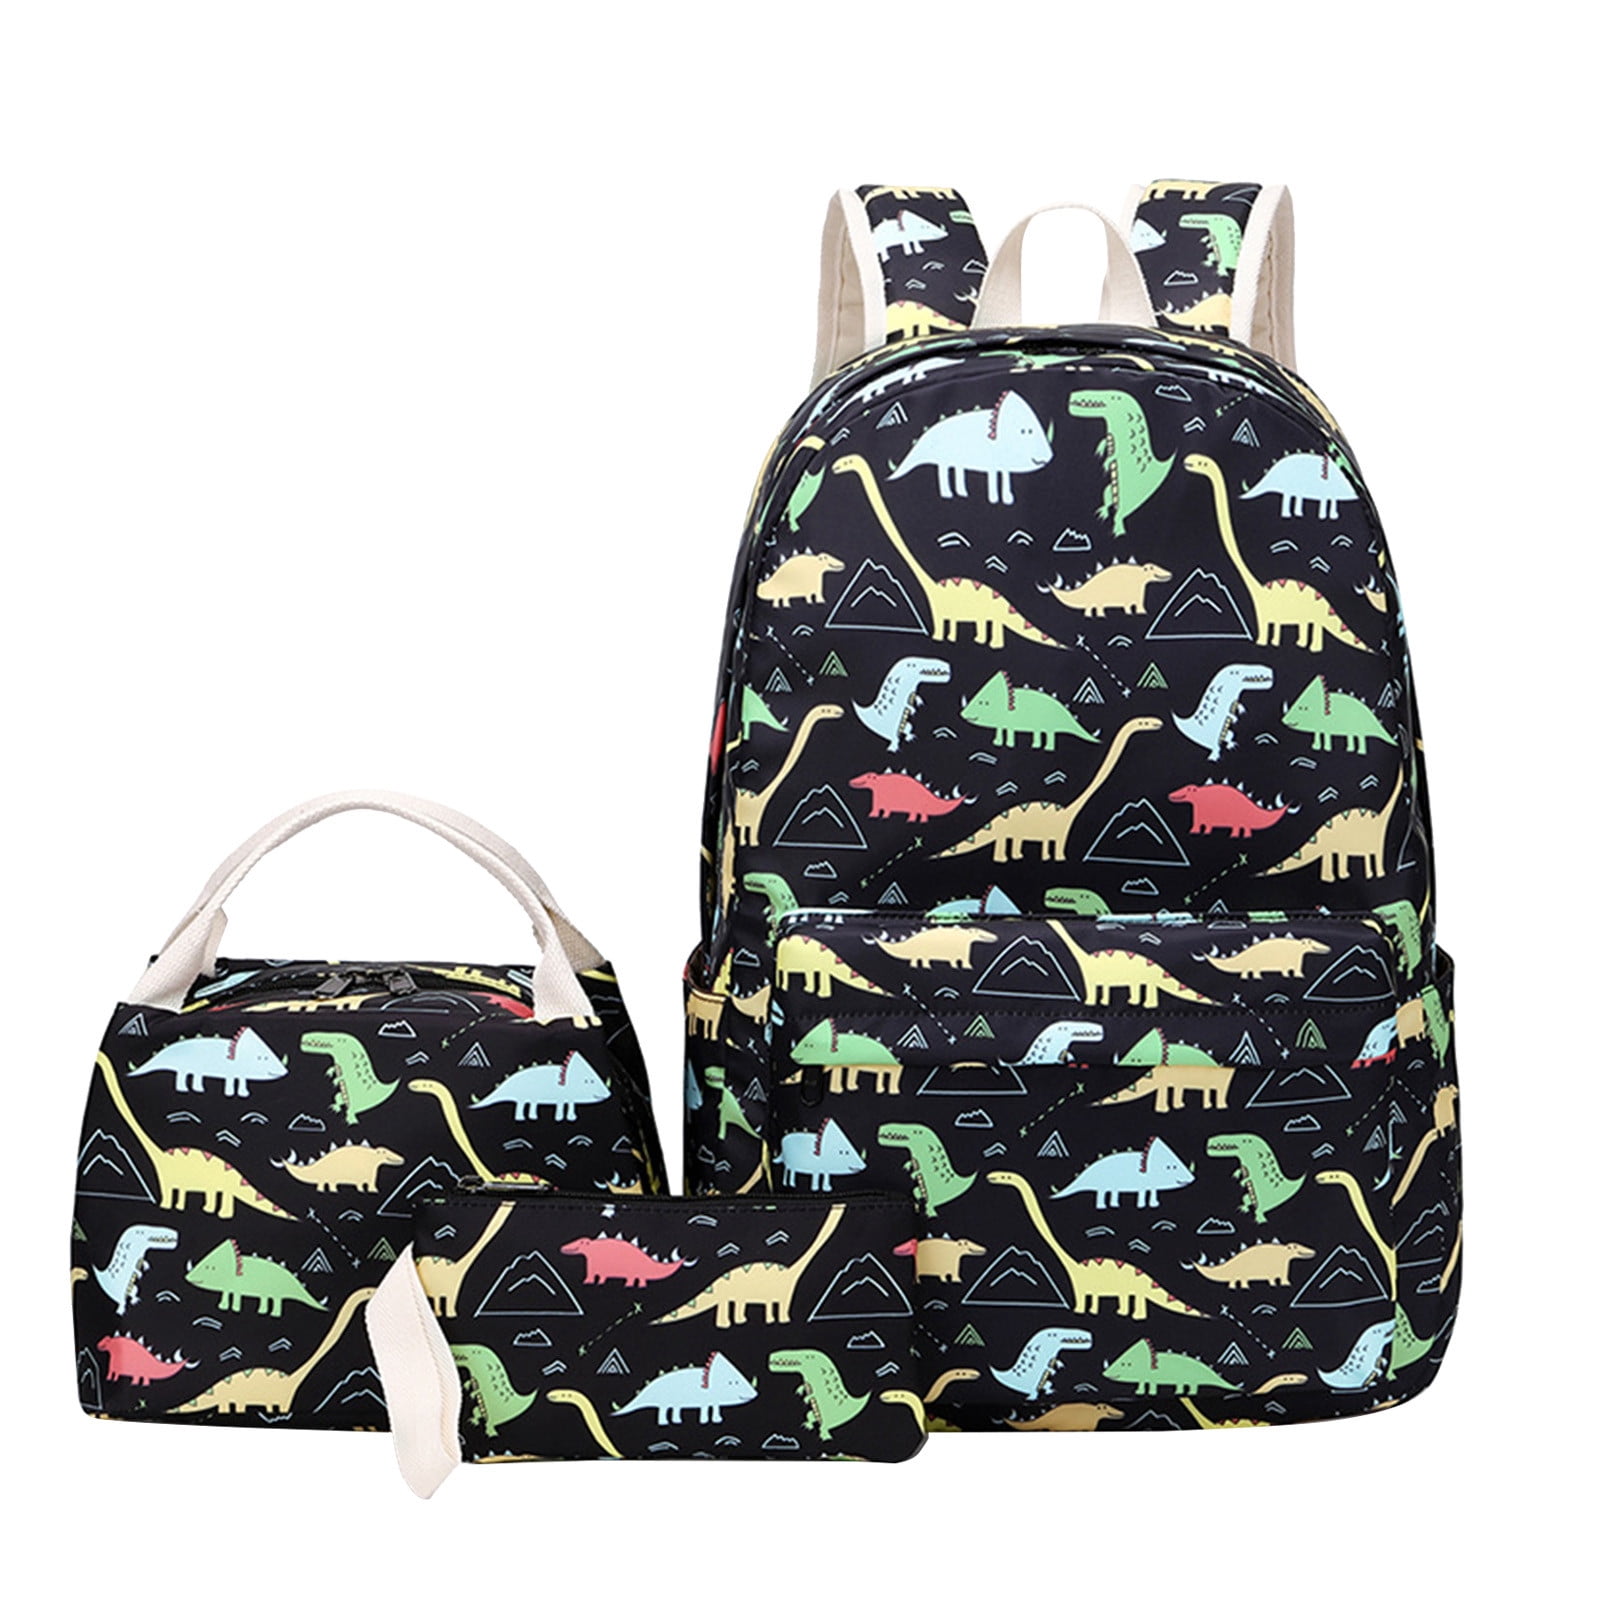 POWOFUN Kids Preschool Kindergarten Backpack Cool Cute Cartoon Travel Backpack Fit A4 with Lunch Bag